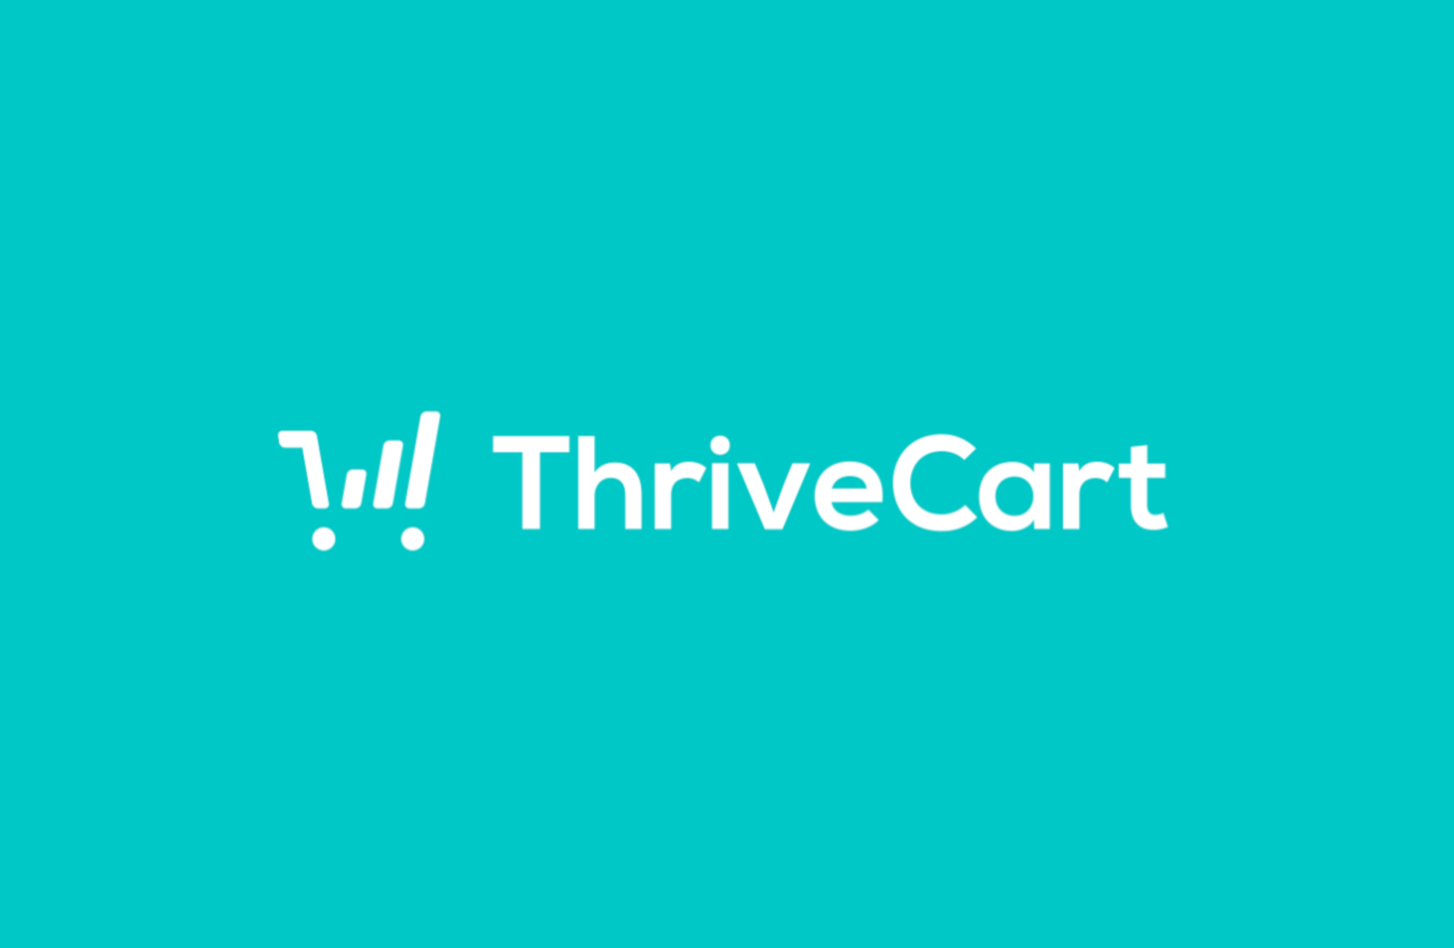 thrivecart